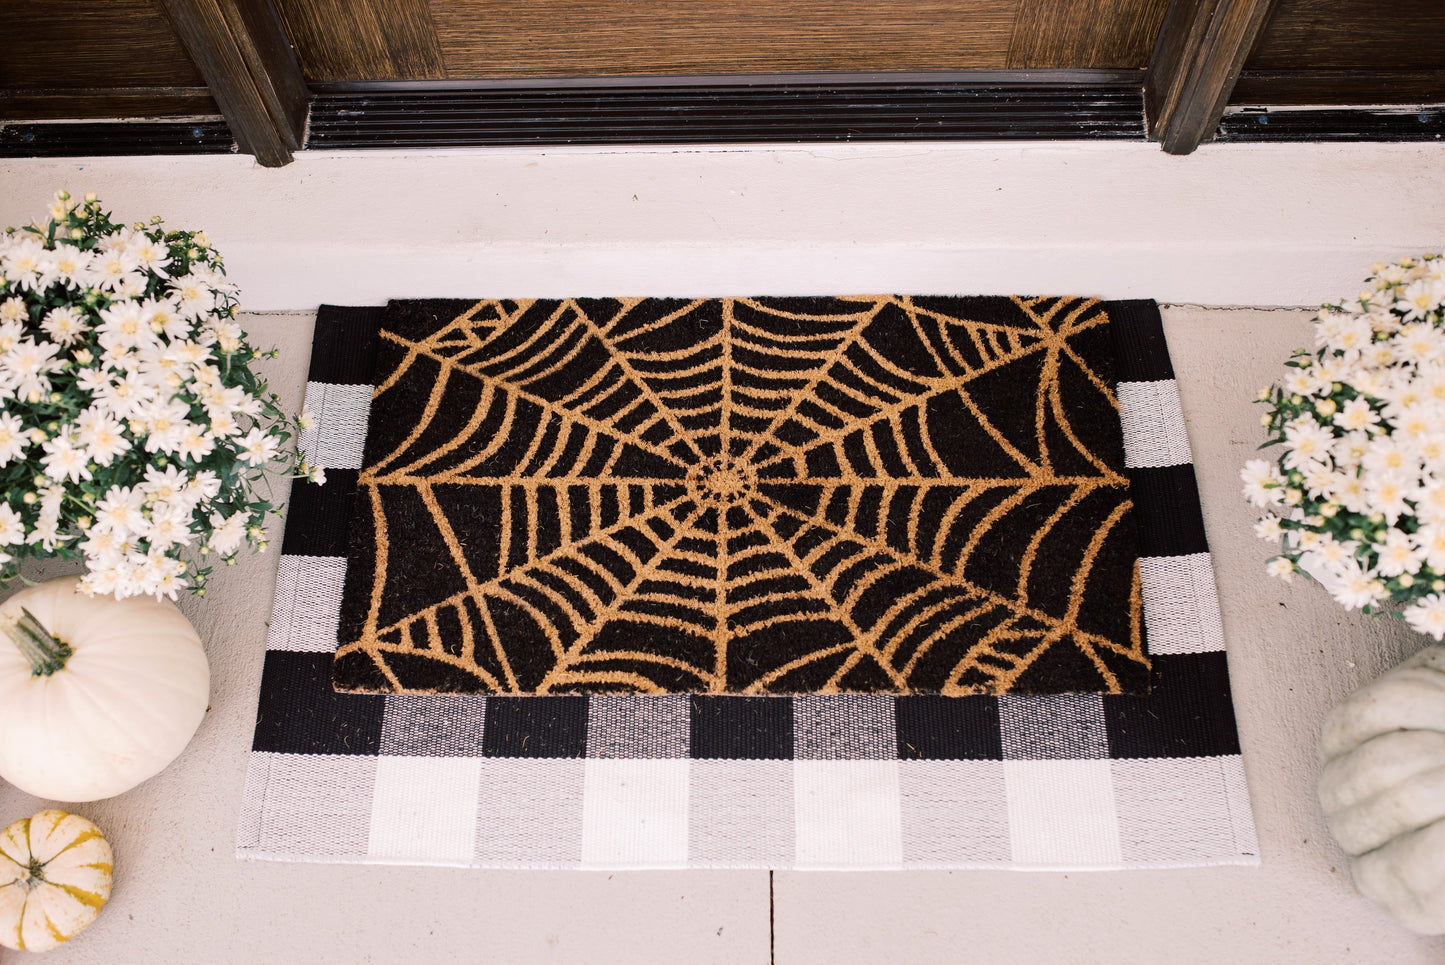 Theodore Magnus Natural Coir Doormat with non-slip backing - 17 x 30 - Outdoor / Indoor - Black - Stuck in a Web